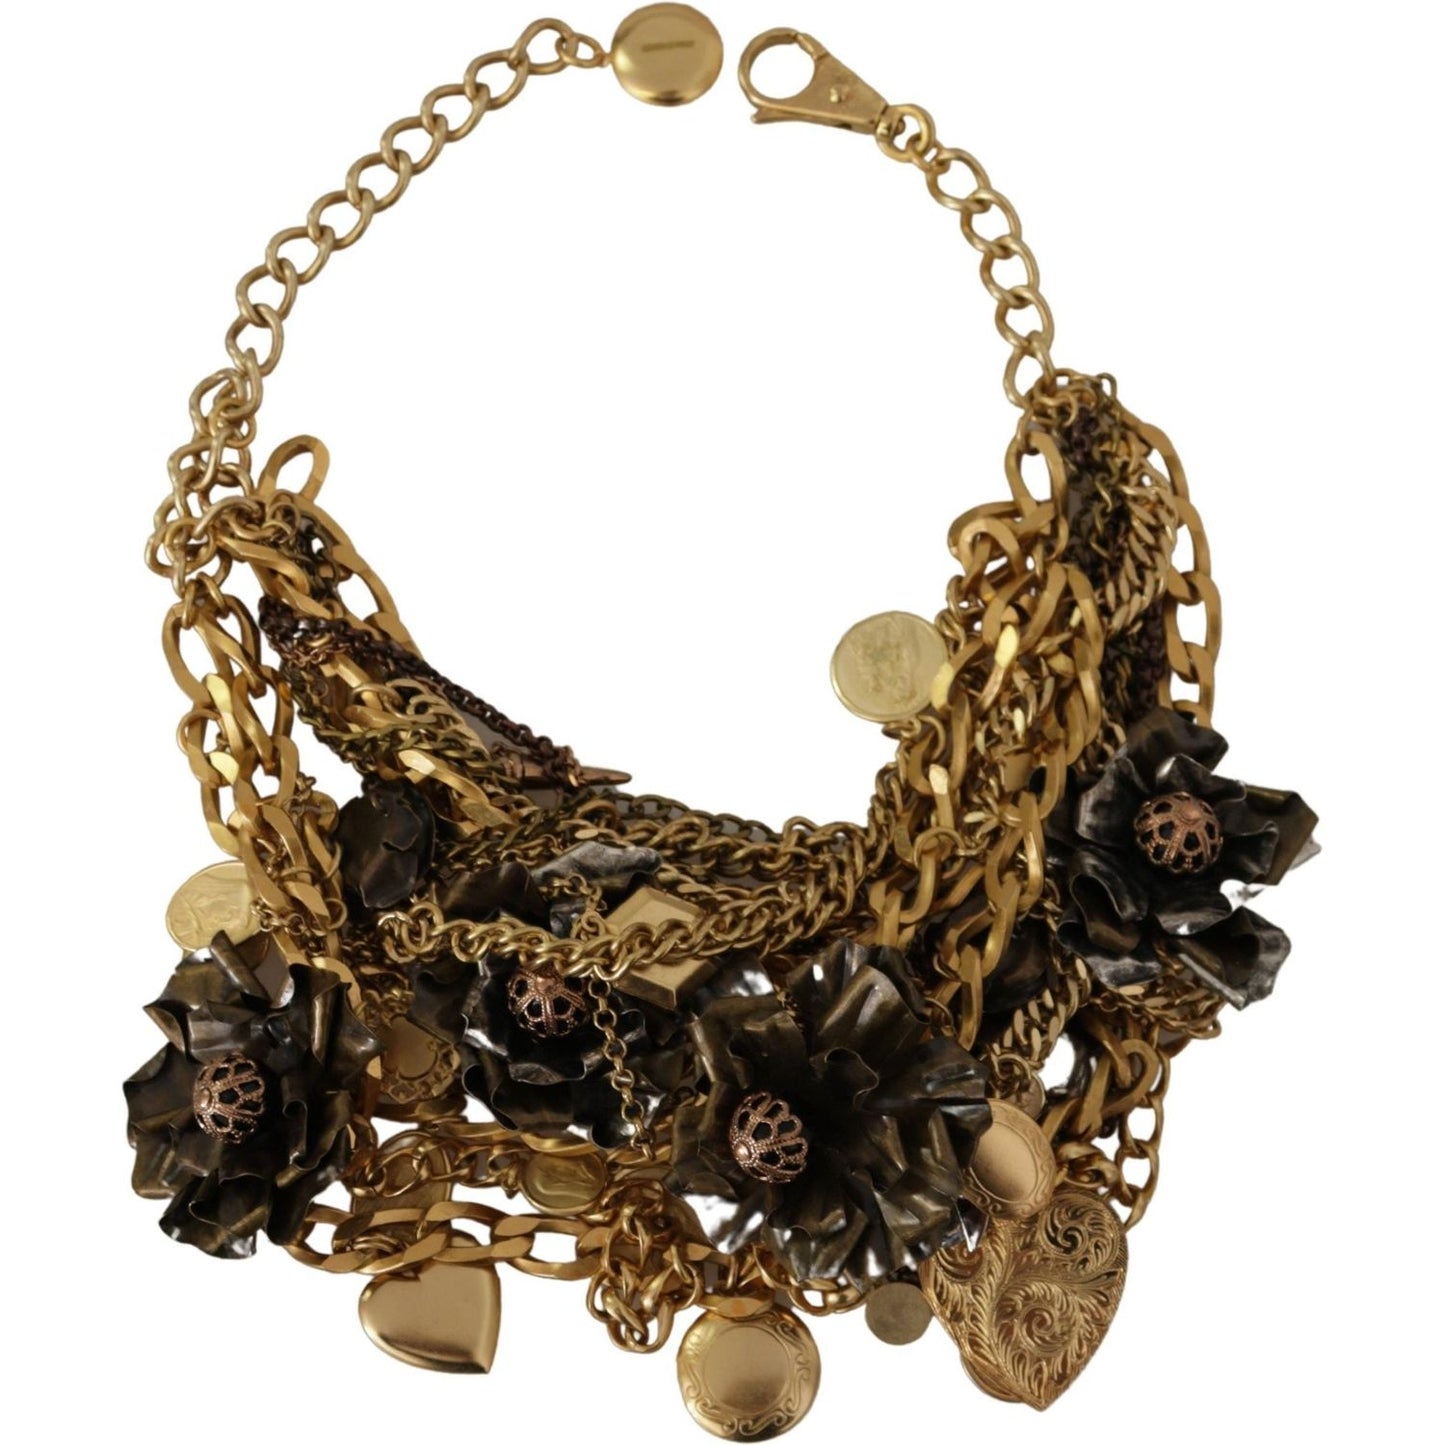 Dolce & Gabbana Sicilian Glamour Gold Statement Necklace gold-brass-sicily-charm-heart-statement-necklace WOMAN NECKLACE IMG_3830-1335205b-05e.jpg